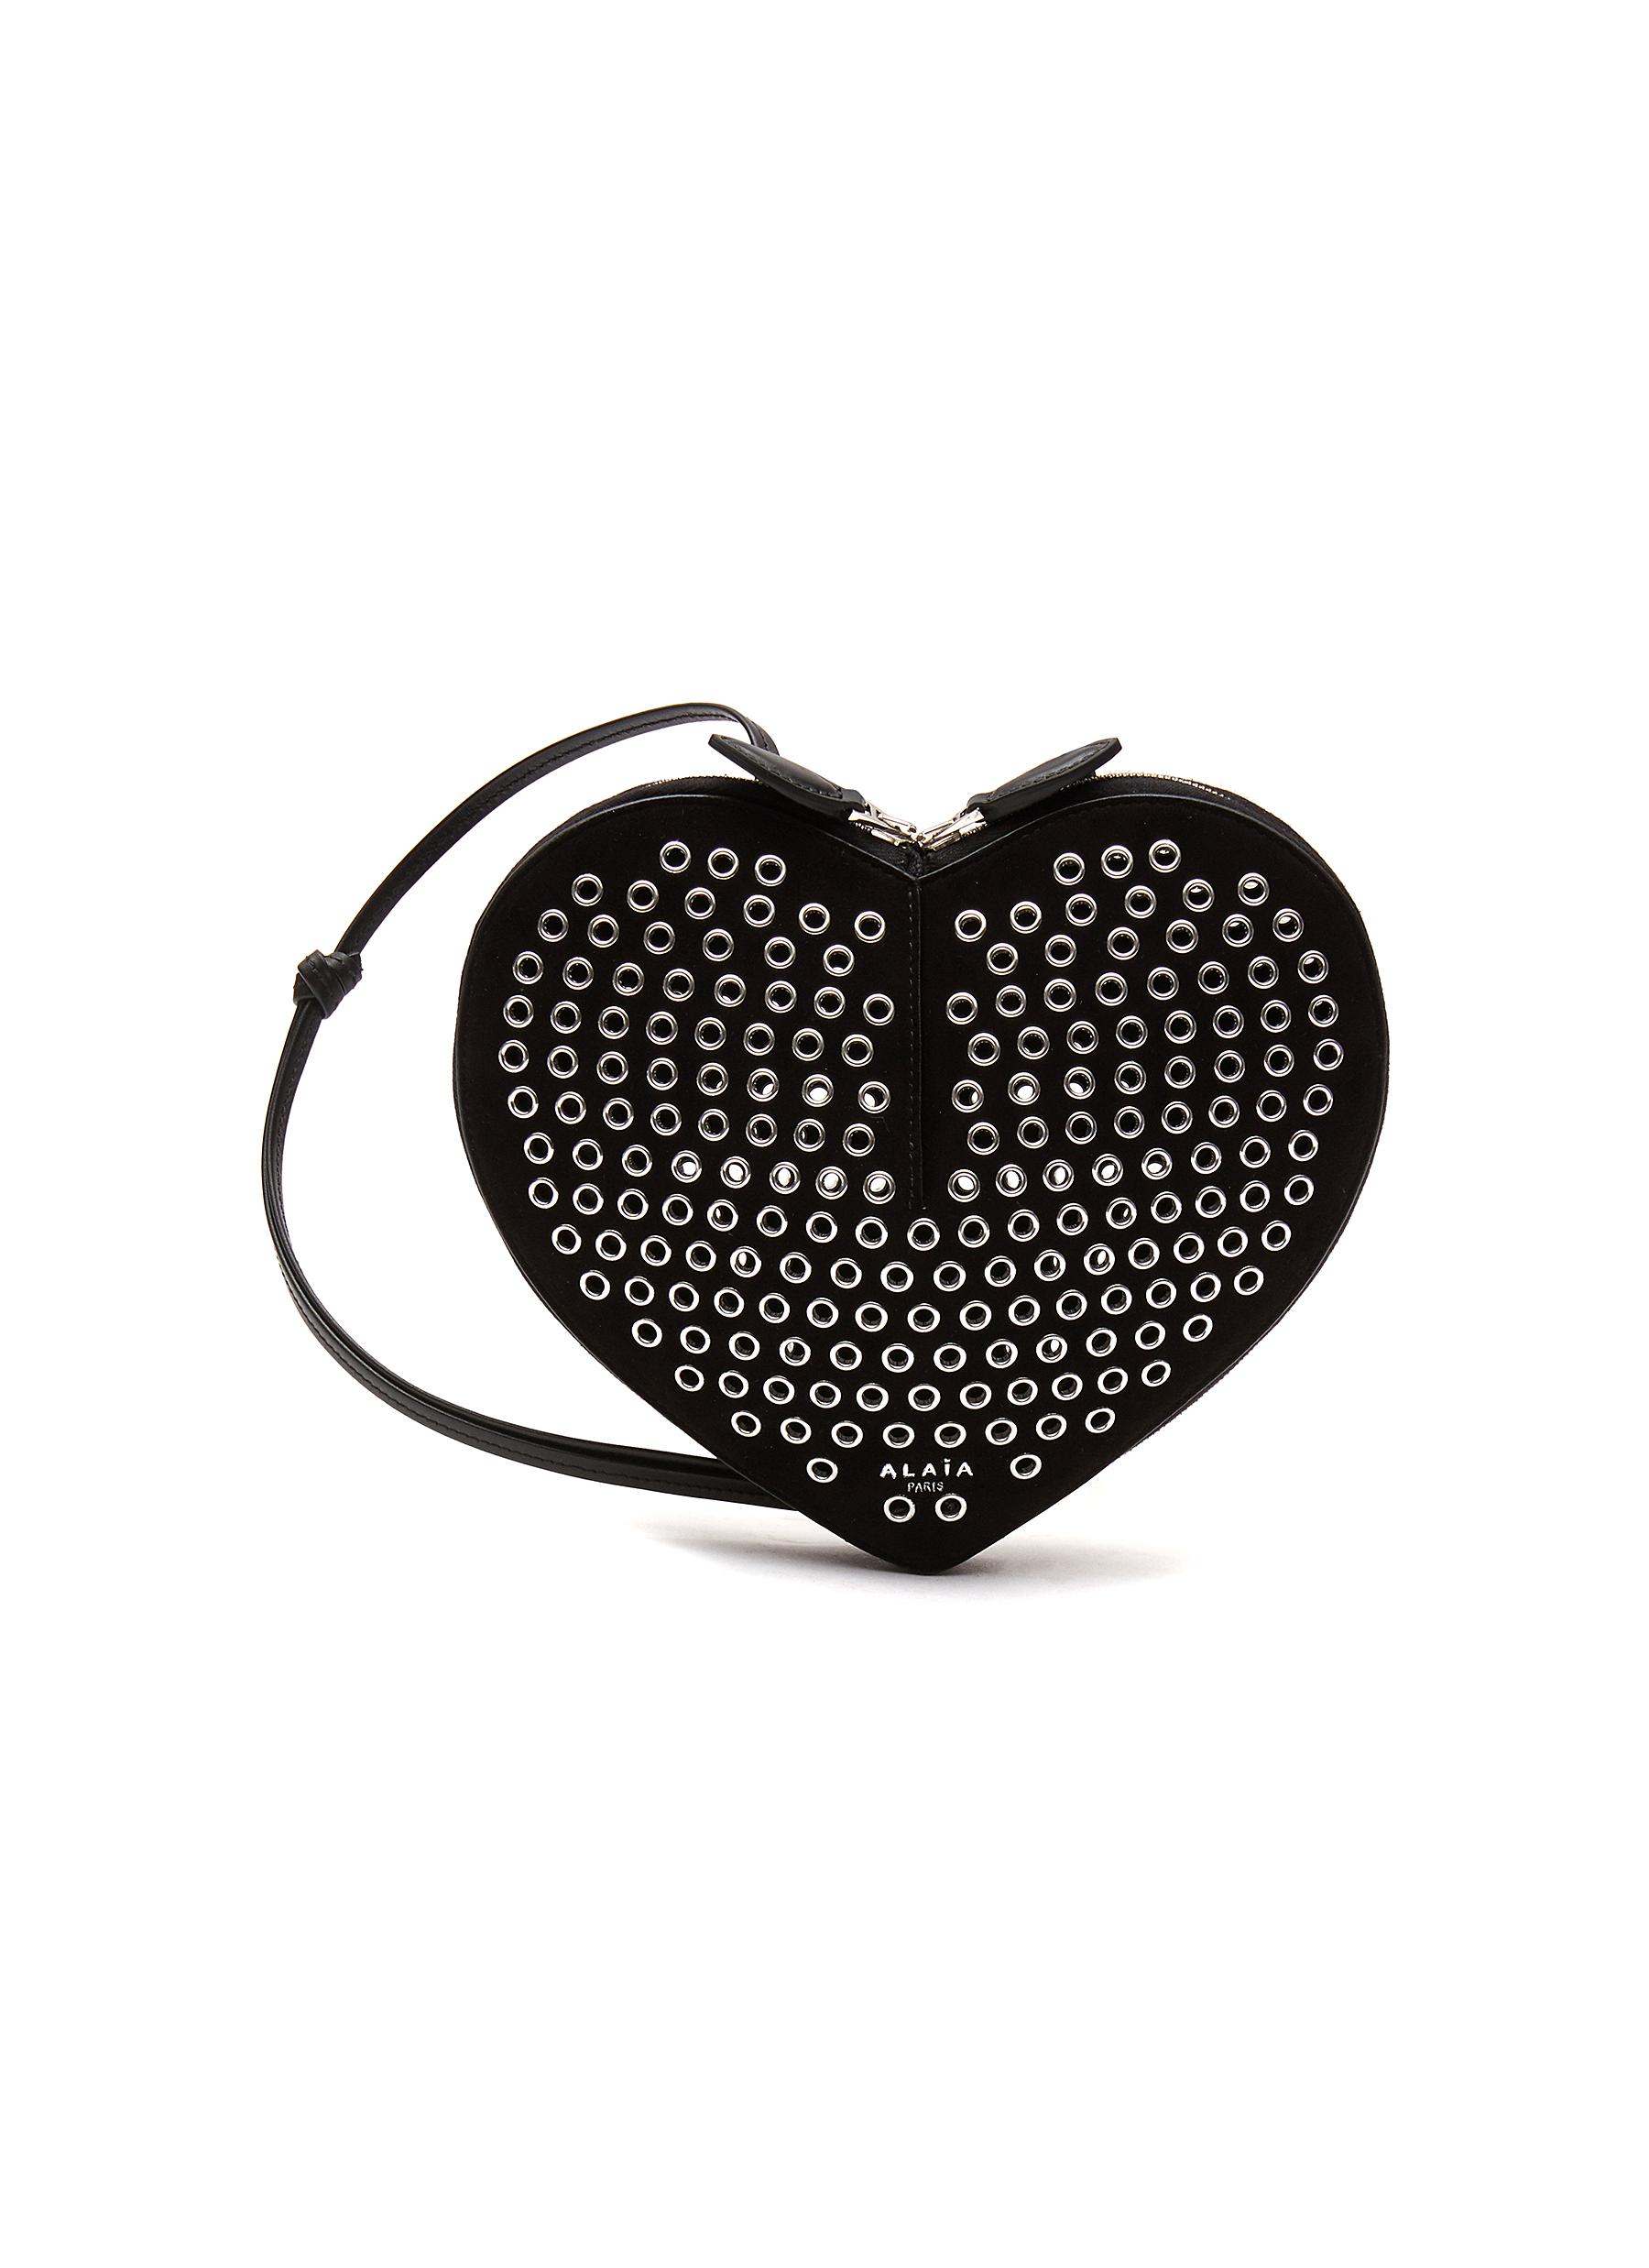 â€˜Le Coeur’ Eyelet AppliquÃ© Heart Shaped Suede Crossbody Bag